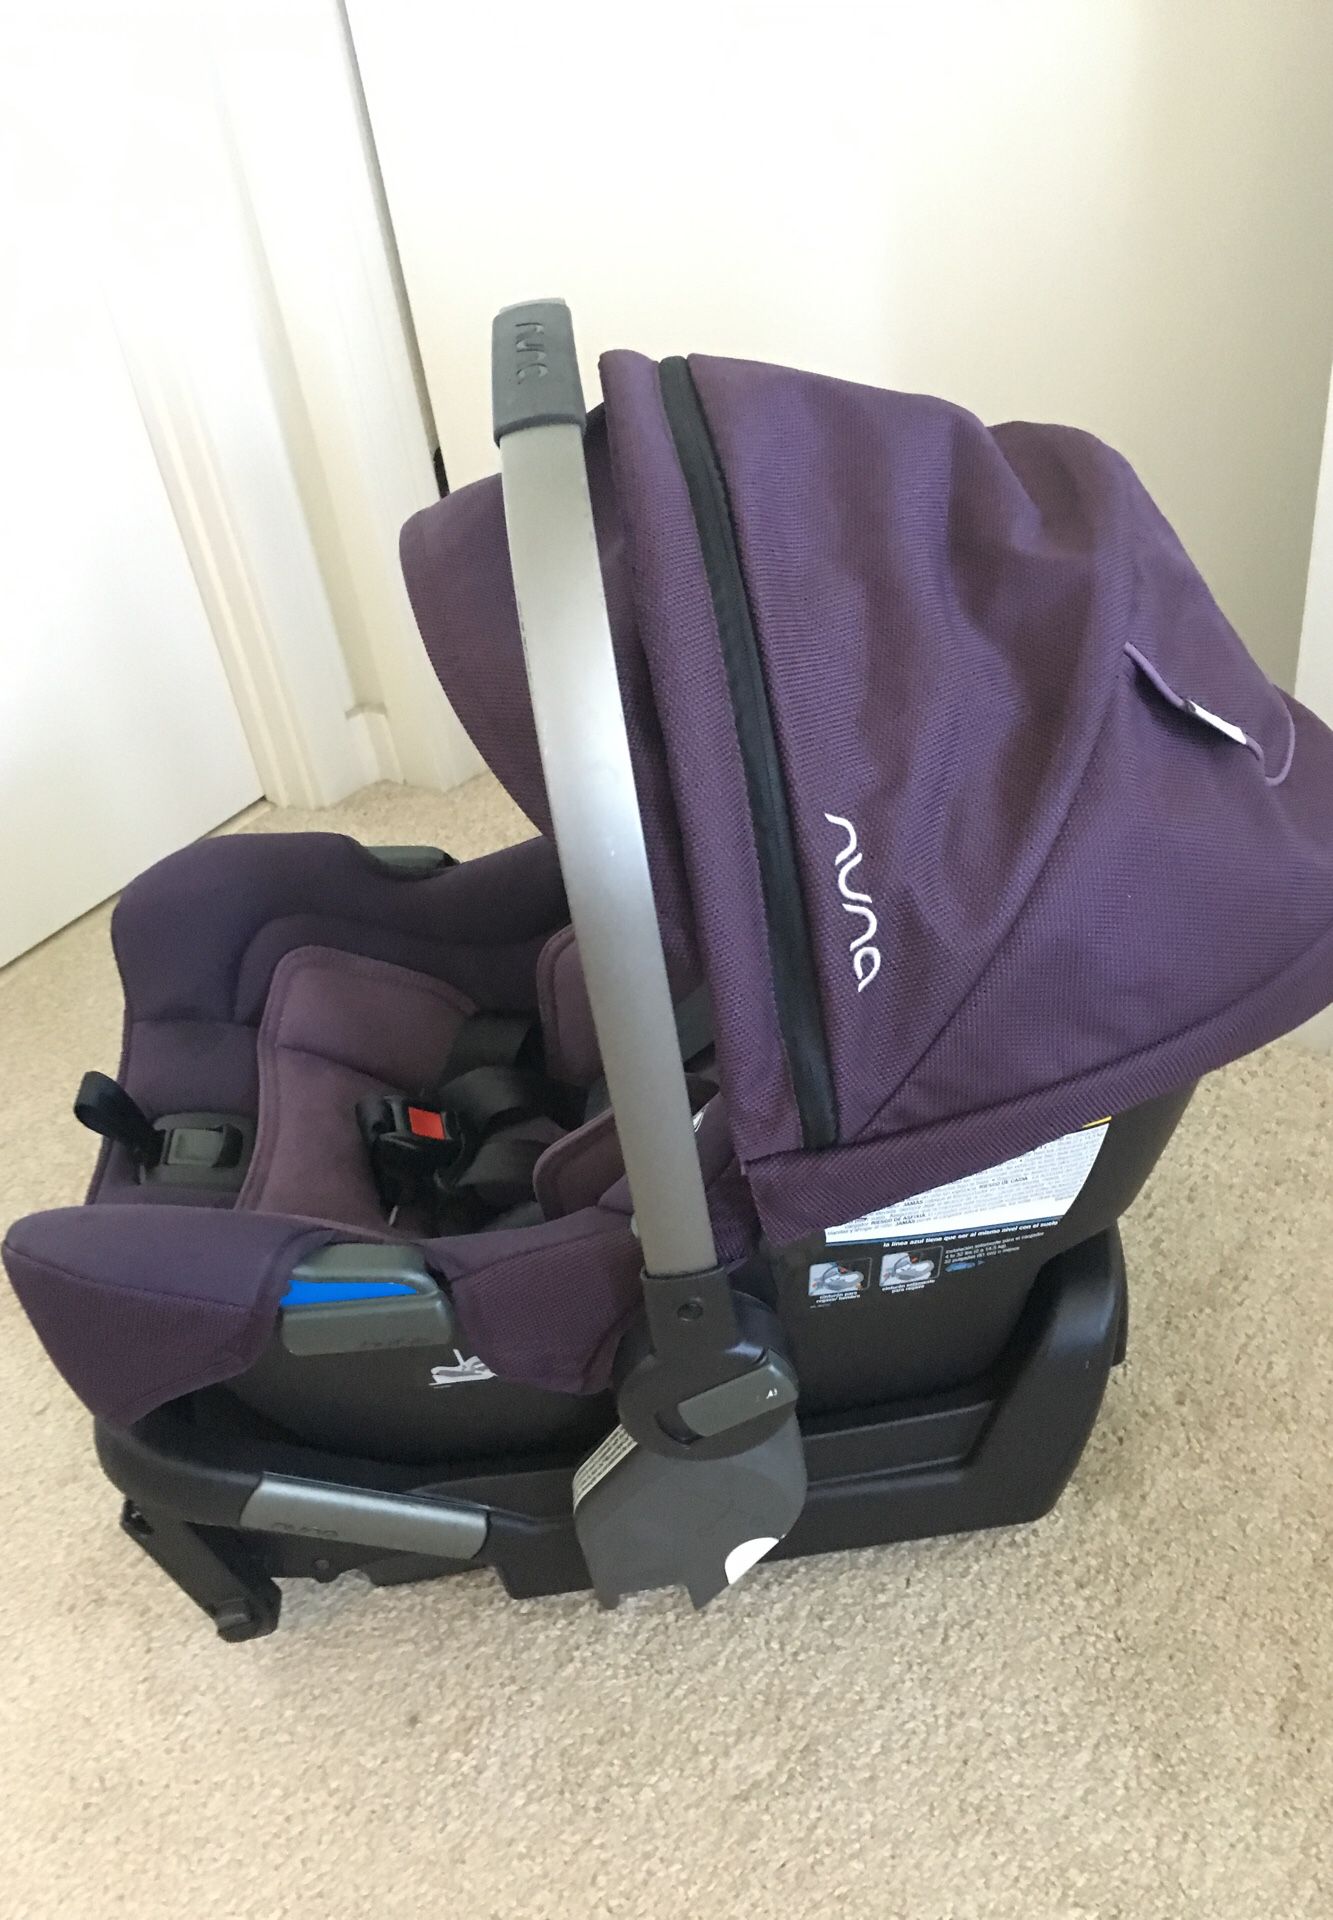 Nuna Pipa infant car seat